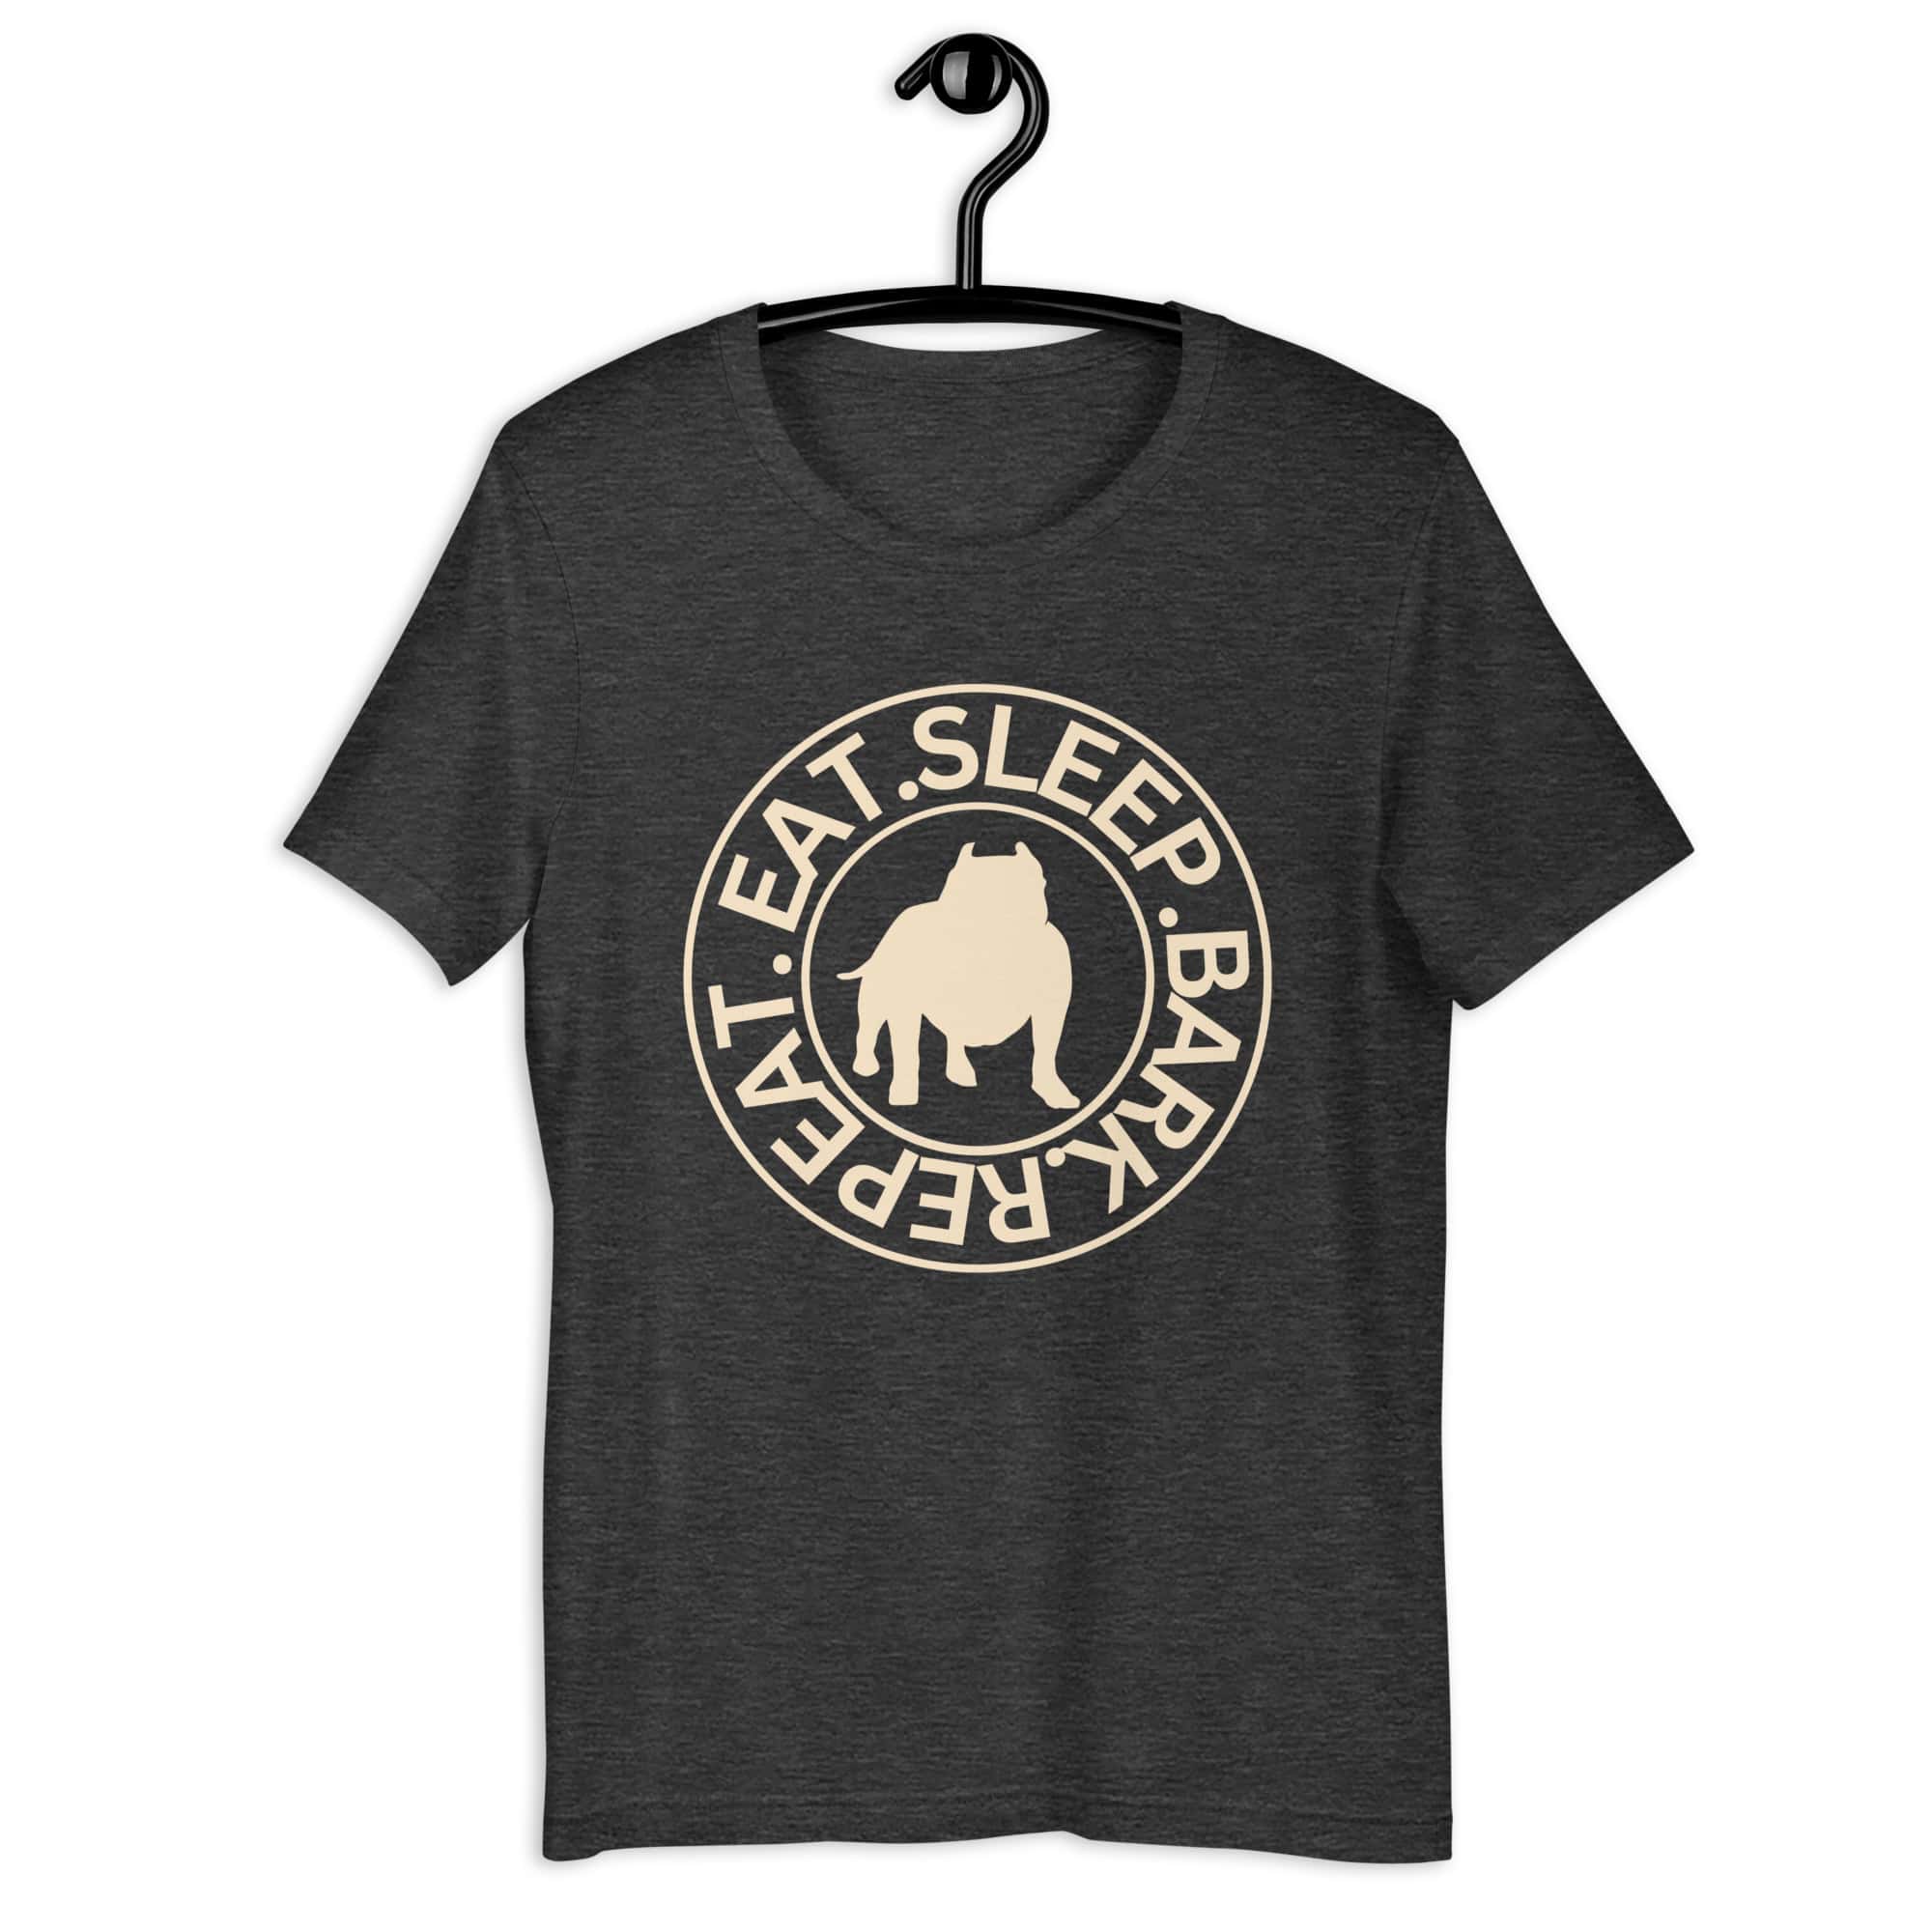 Eat Sleep Bark Repeat Bulldog Unisex T-Shirt. Dark Grey